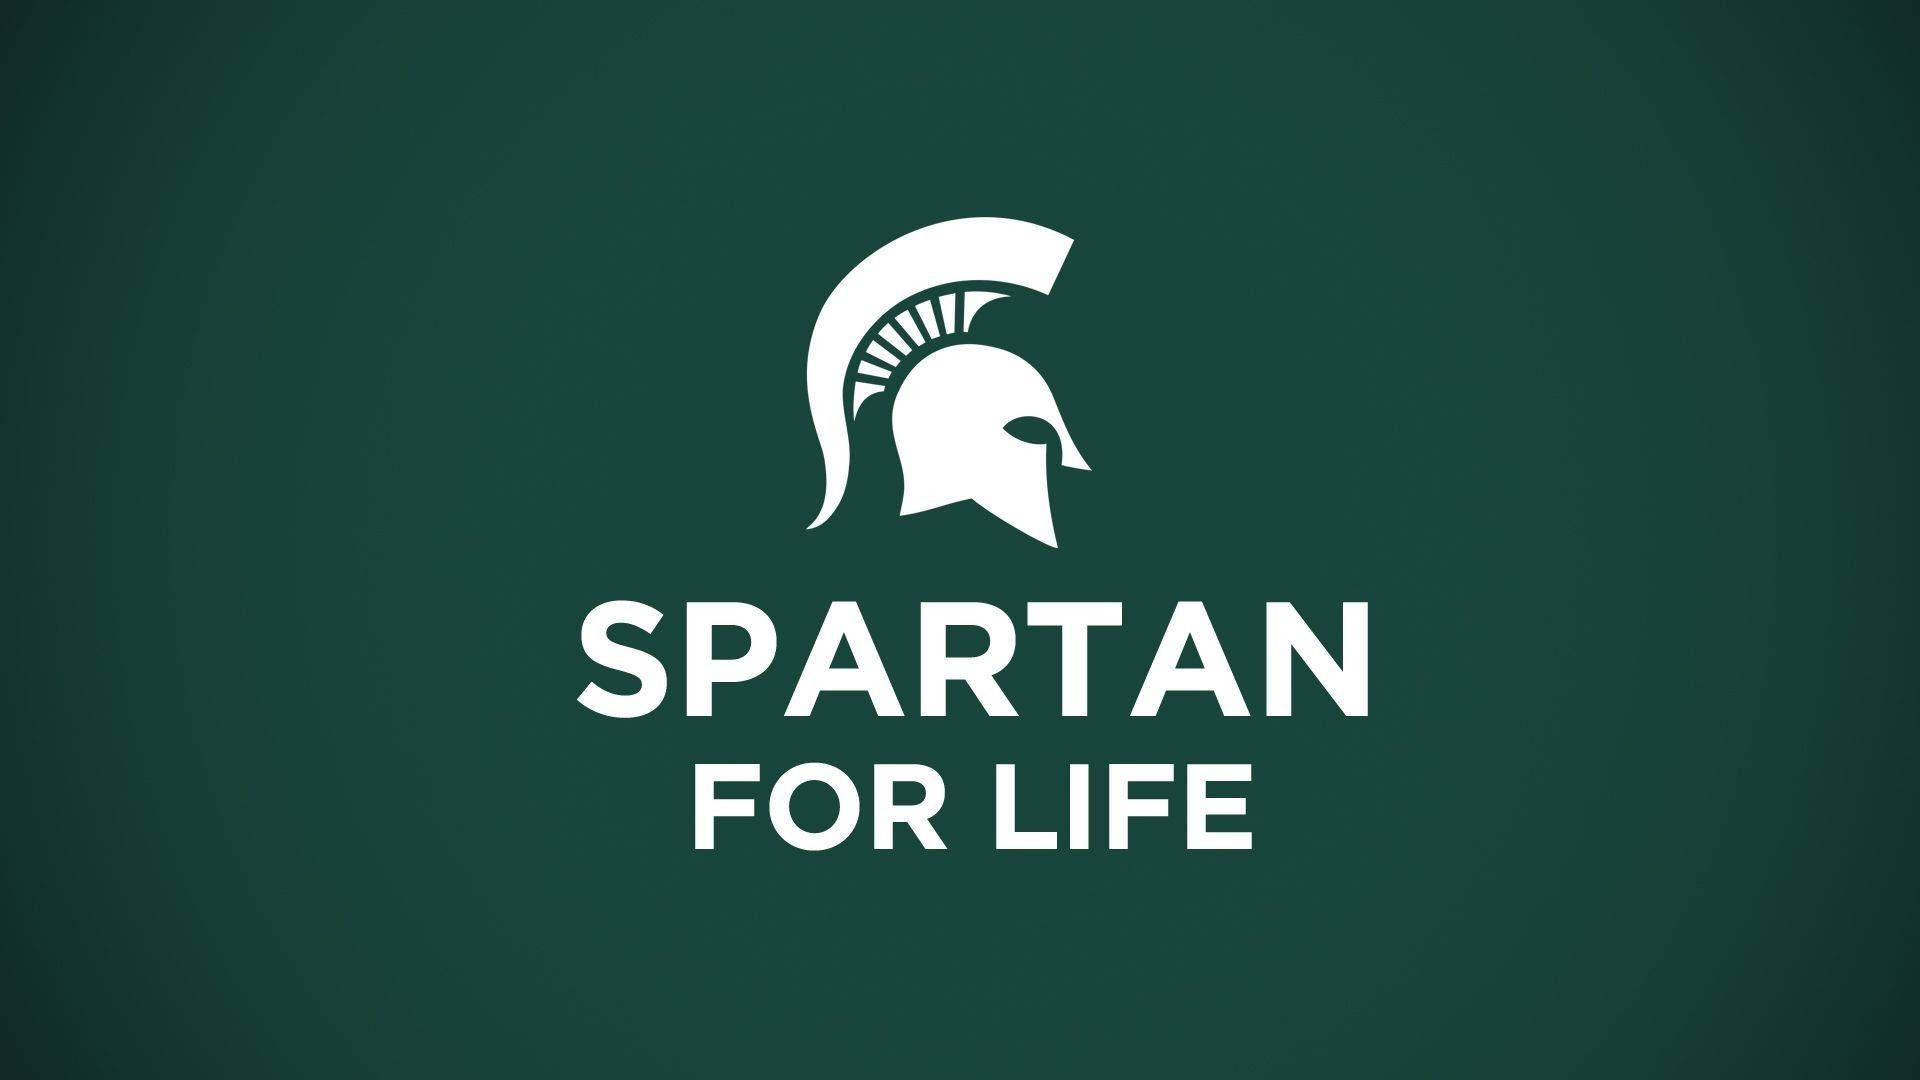 Michigan State University Spartan For Life Wallpaper